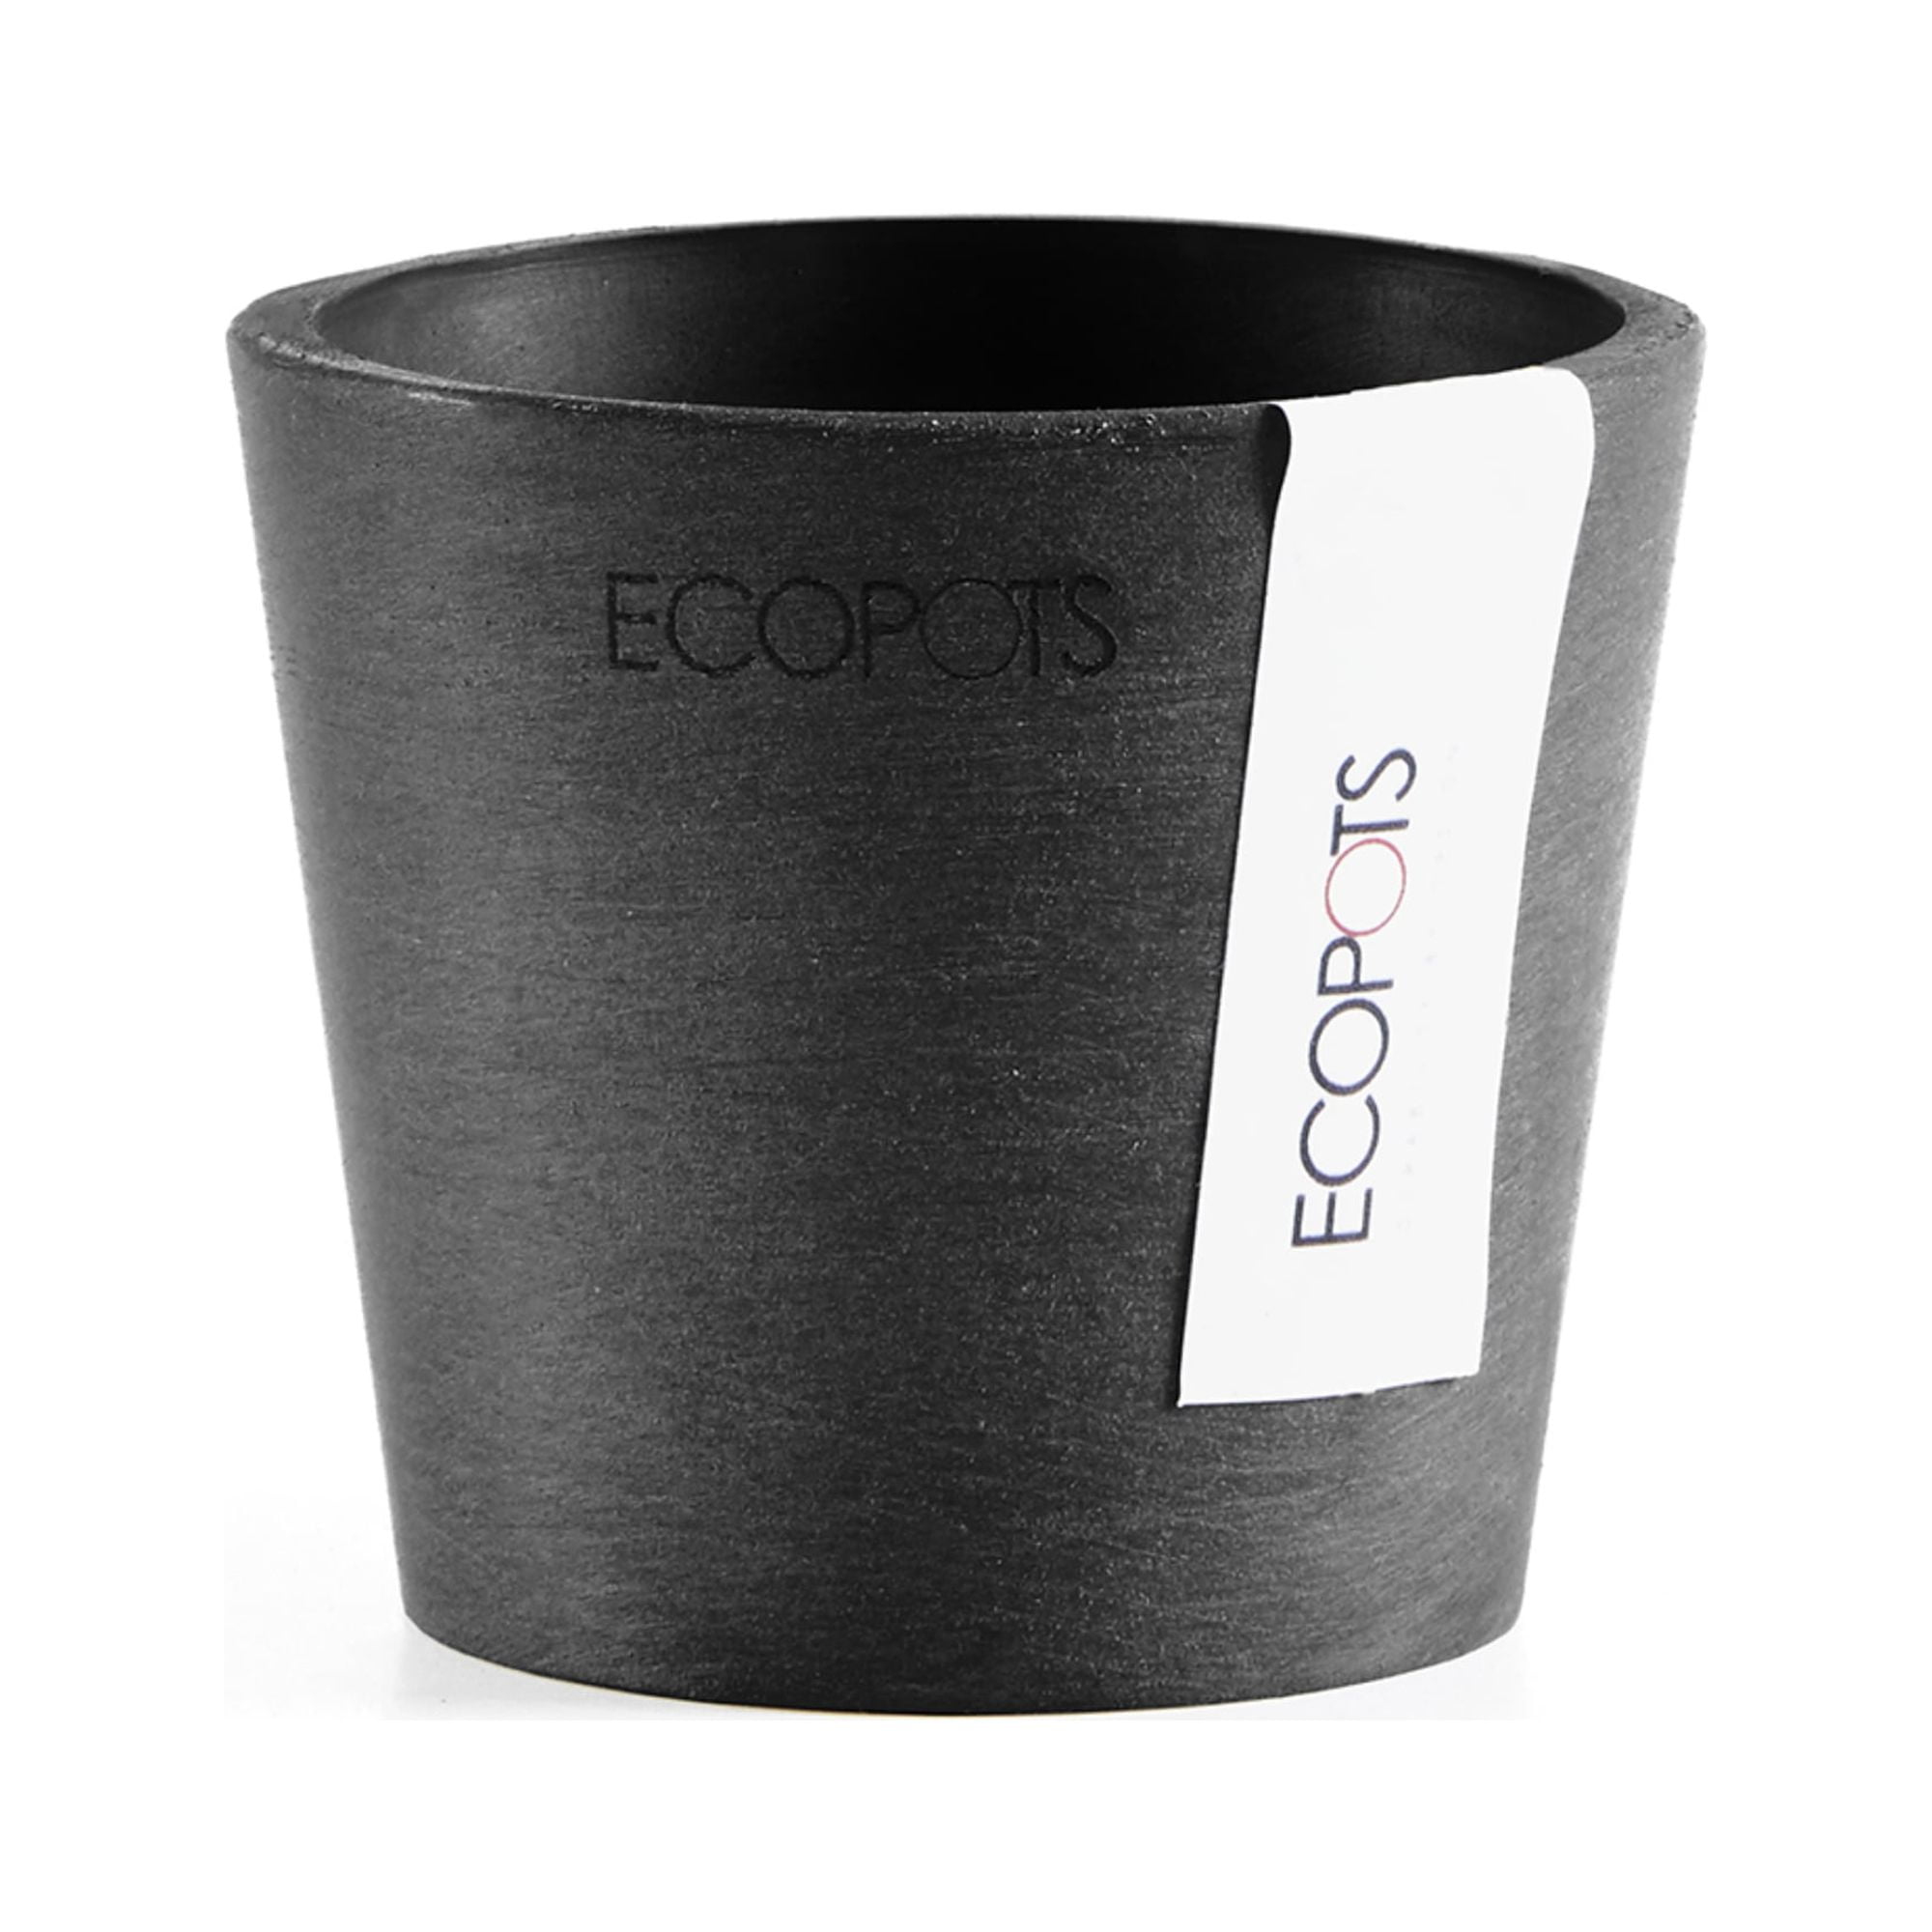 EcoPots Amsterdam Durable Indoor/Outdoor Modern Round Recycled Plastic  Planter Flower Pot, Dark Grey, 3\